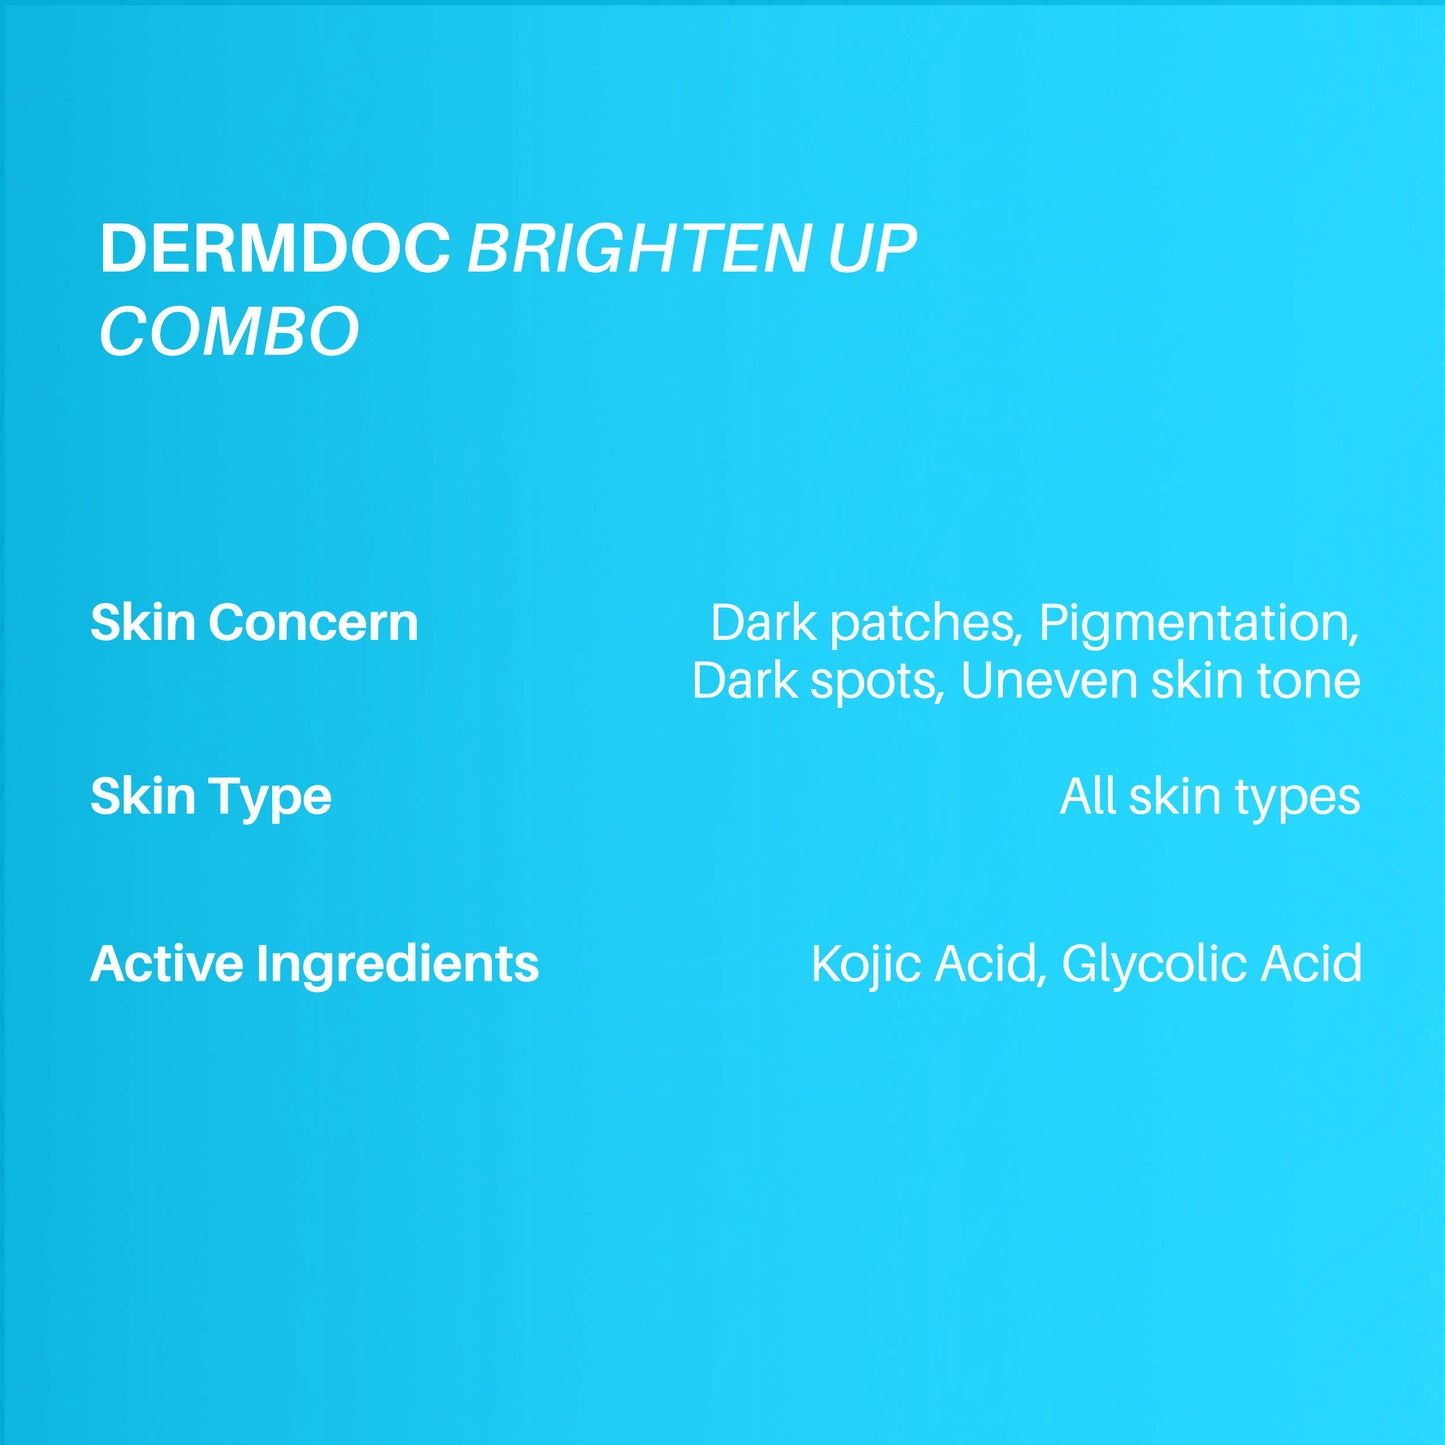 DERMDOC  Combo Kit Brighten Up Combo | kojic acid night cream | glycolic acid underarm spray | treatment for dark underarms, dark patches | hyperpigmentation | dark spots | skin brightening cream